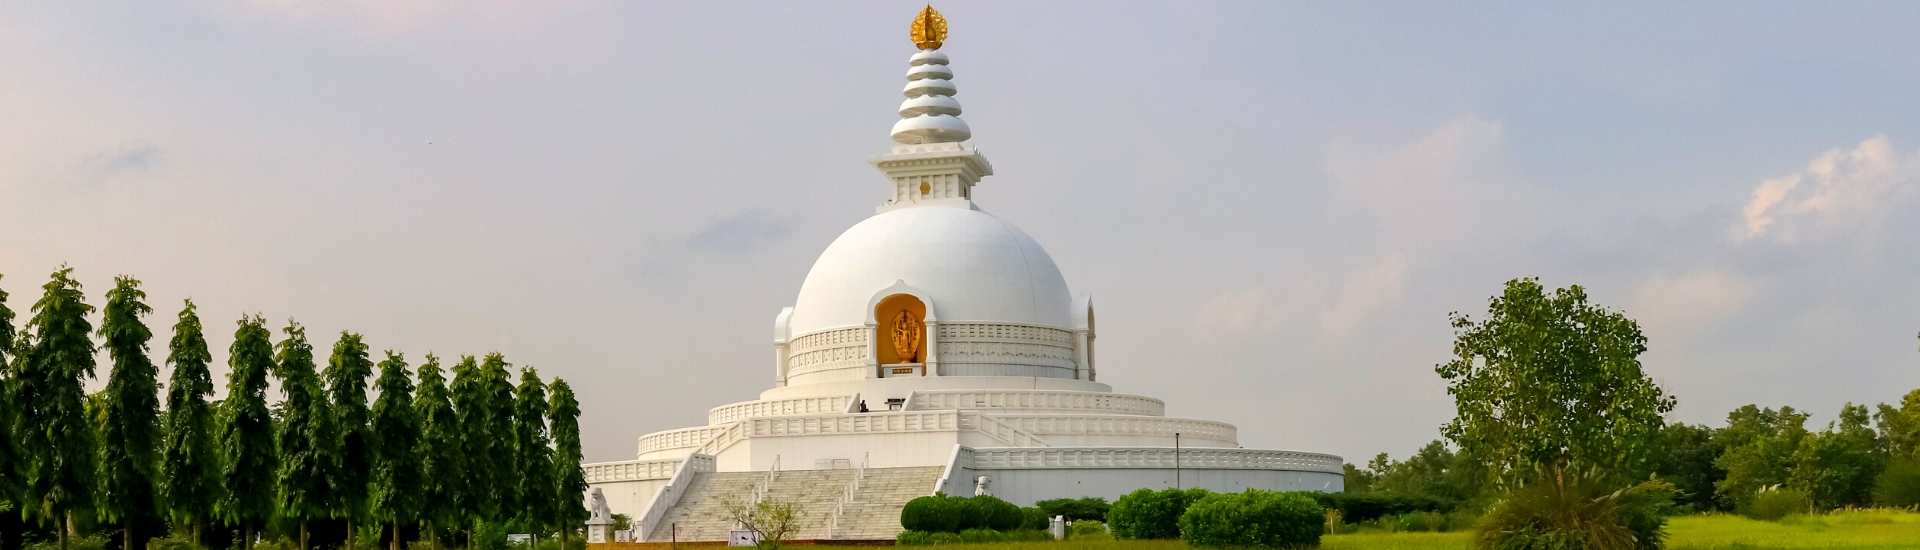 NEPAL HEADER - World Peace Pagoda in Lumbini, Nepal